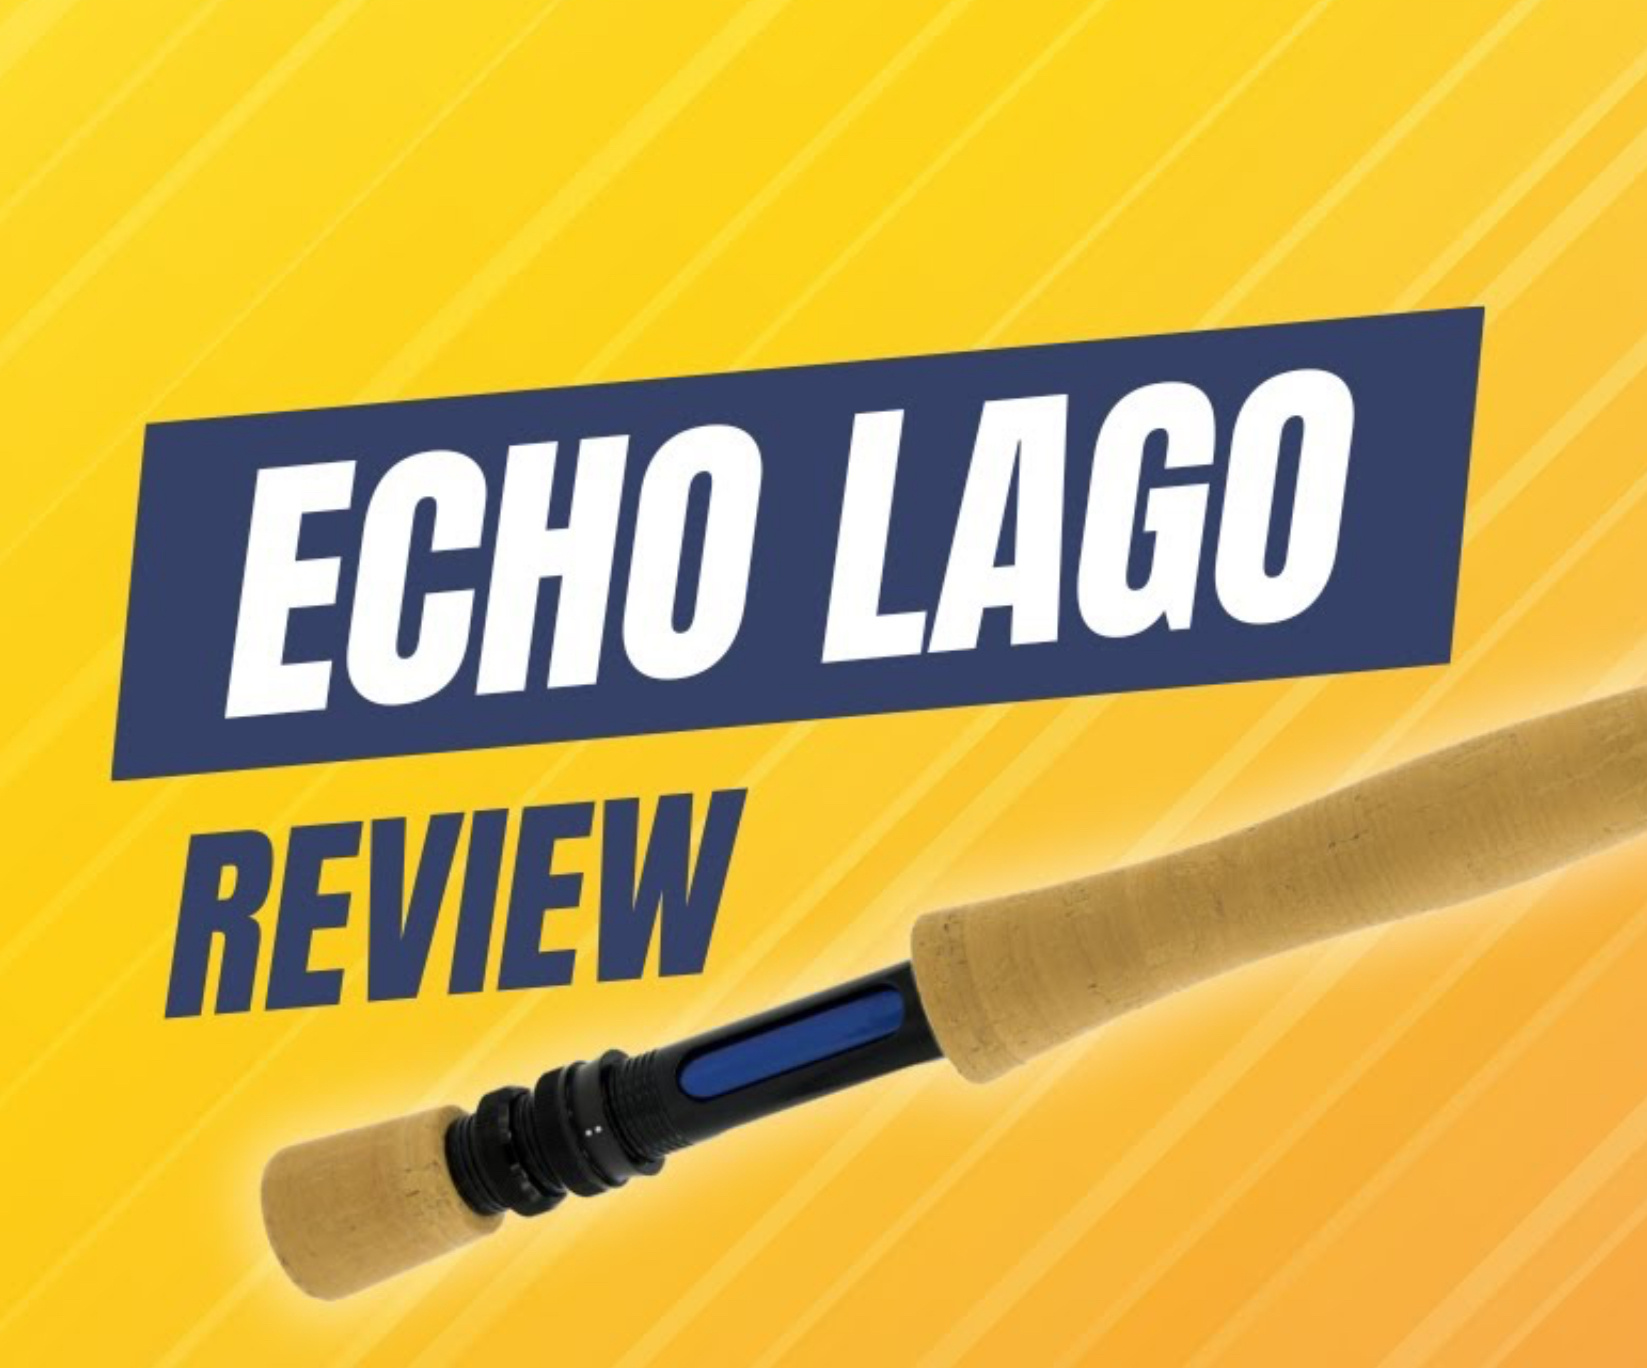 Echo Lago Review